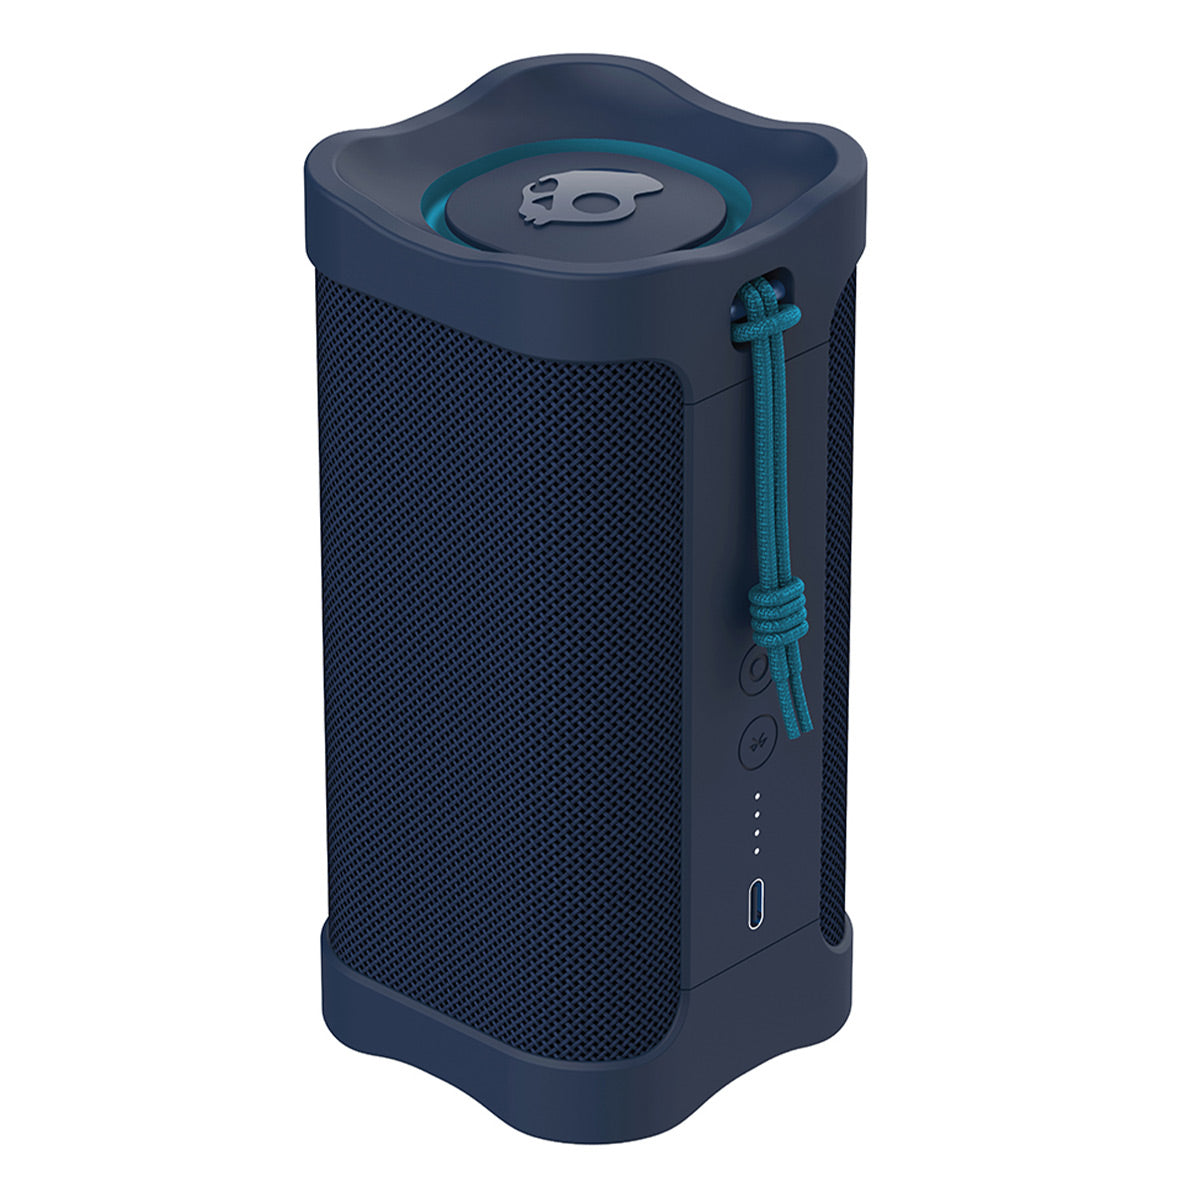 Skullcandy Terrain Wireless Bluetooth Speaker with IPX7 Waterproof Rating (Navy)